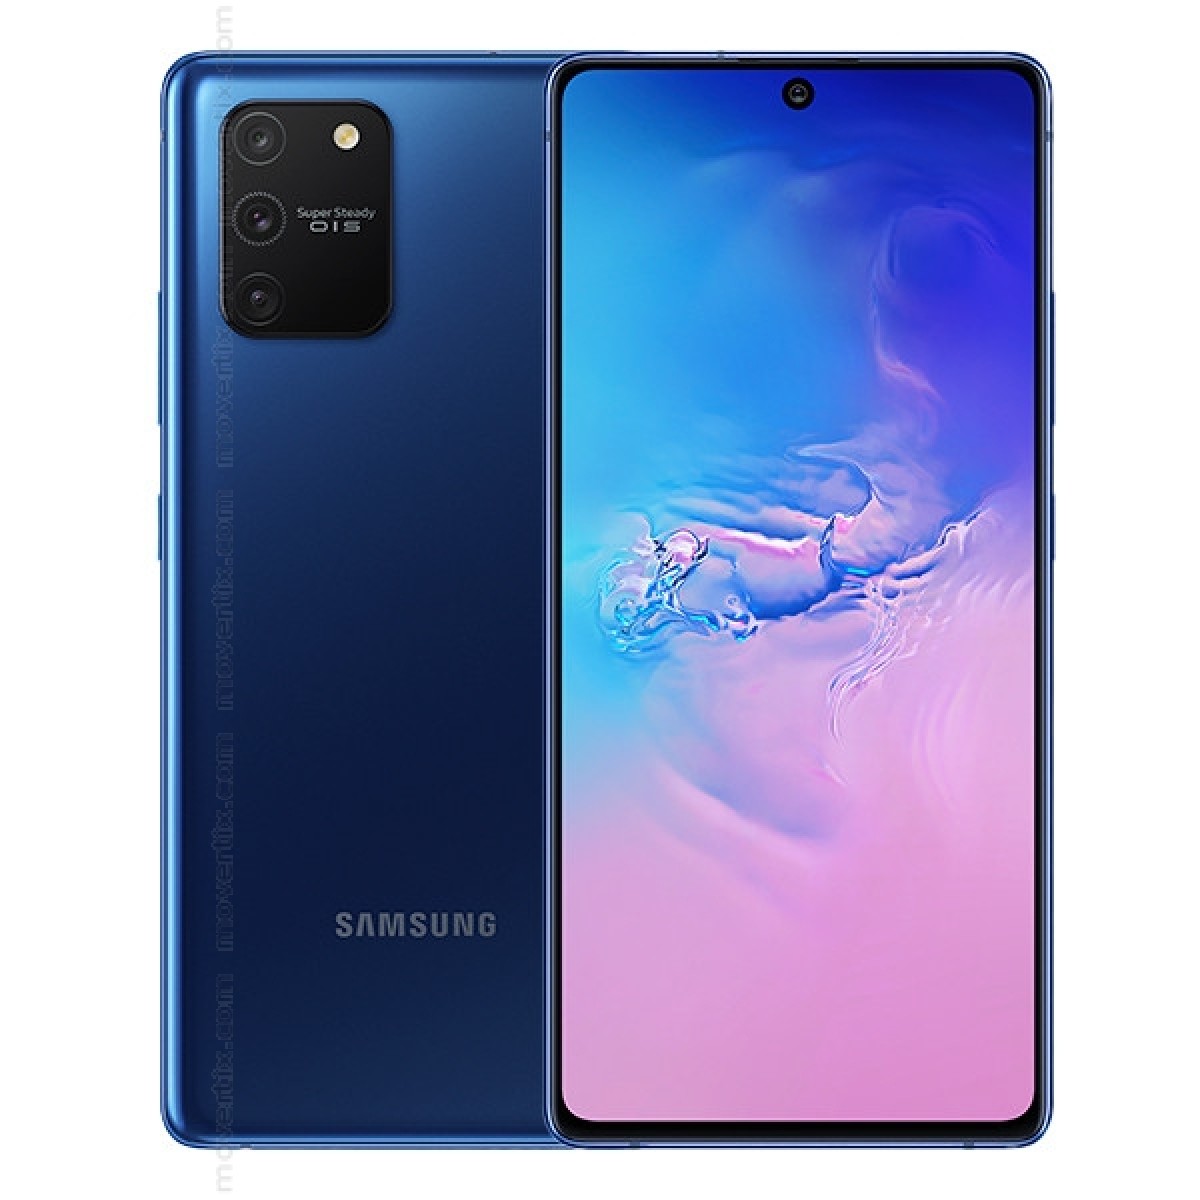 Samsung Galaxy S10 Lite 128GB Blue Unlocked | eBay